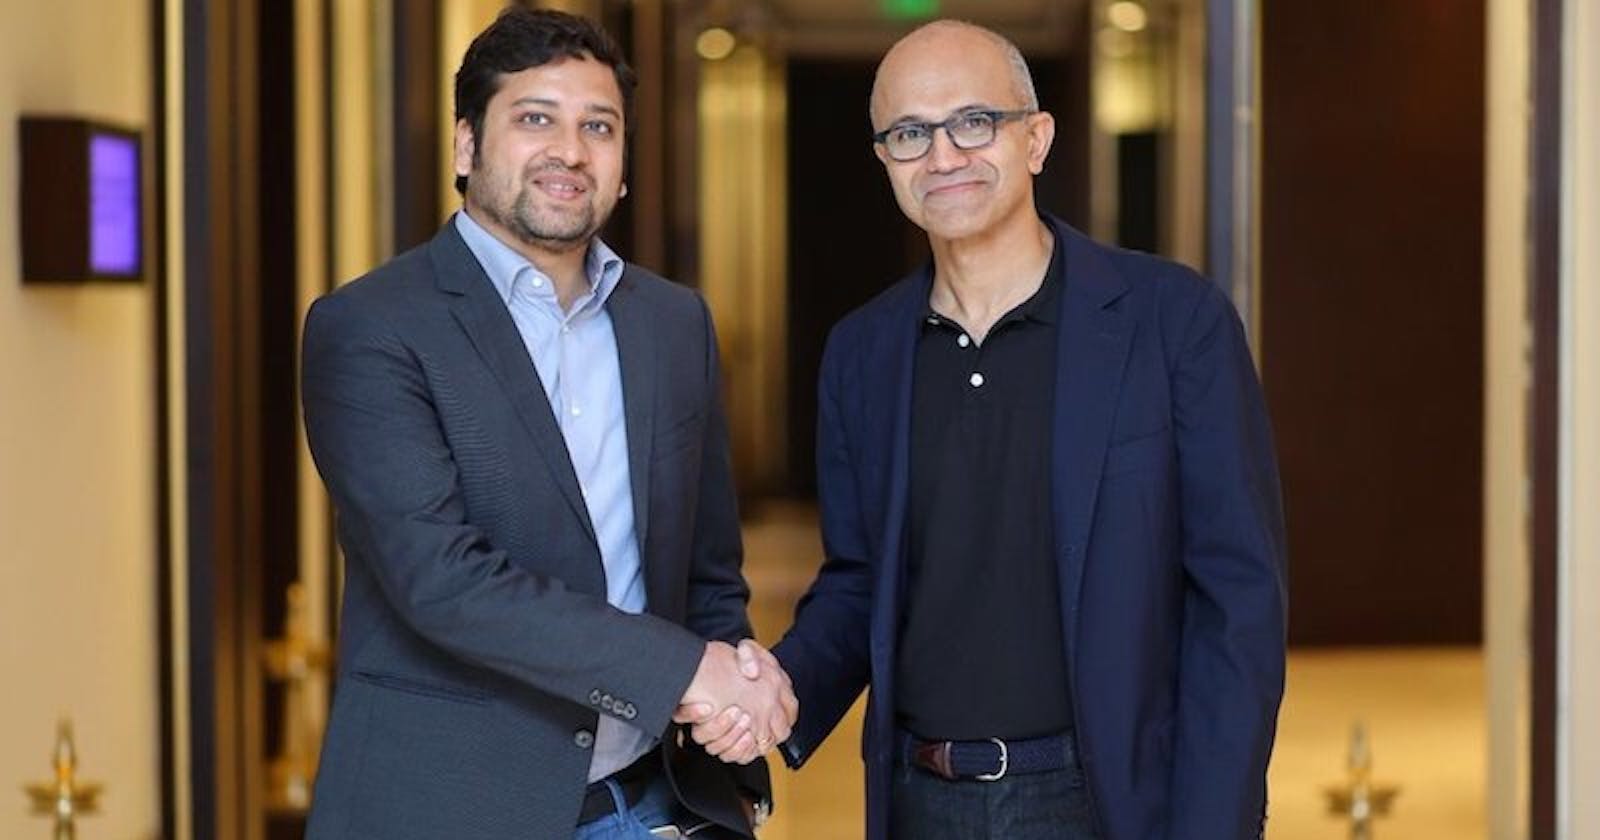 Microsoft, Flipkart Announce Cloud Partnership in India | NDTV Gadgets360.com